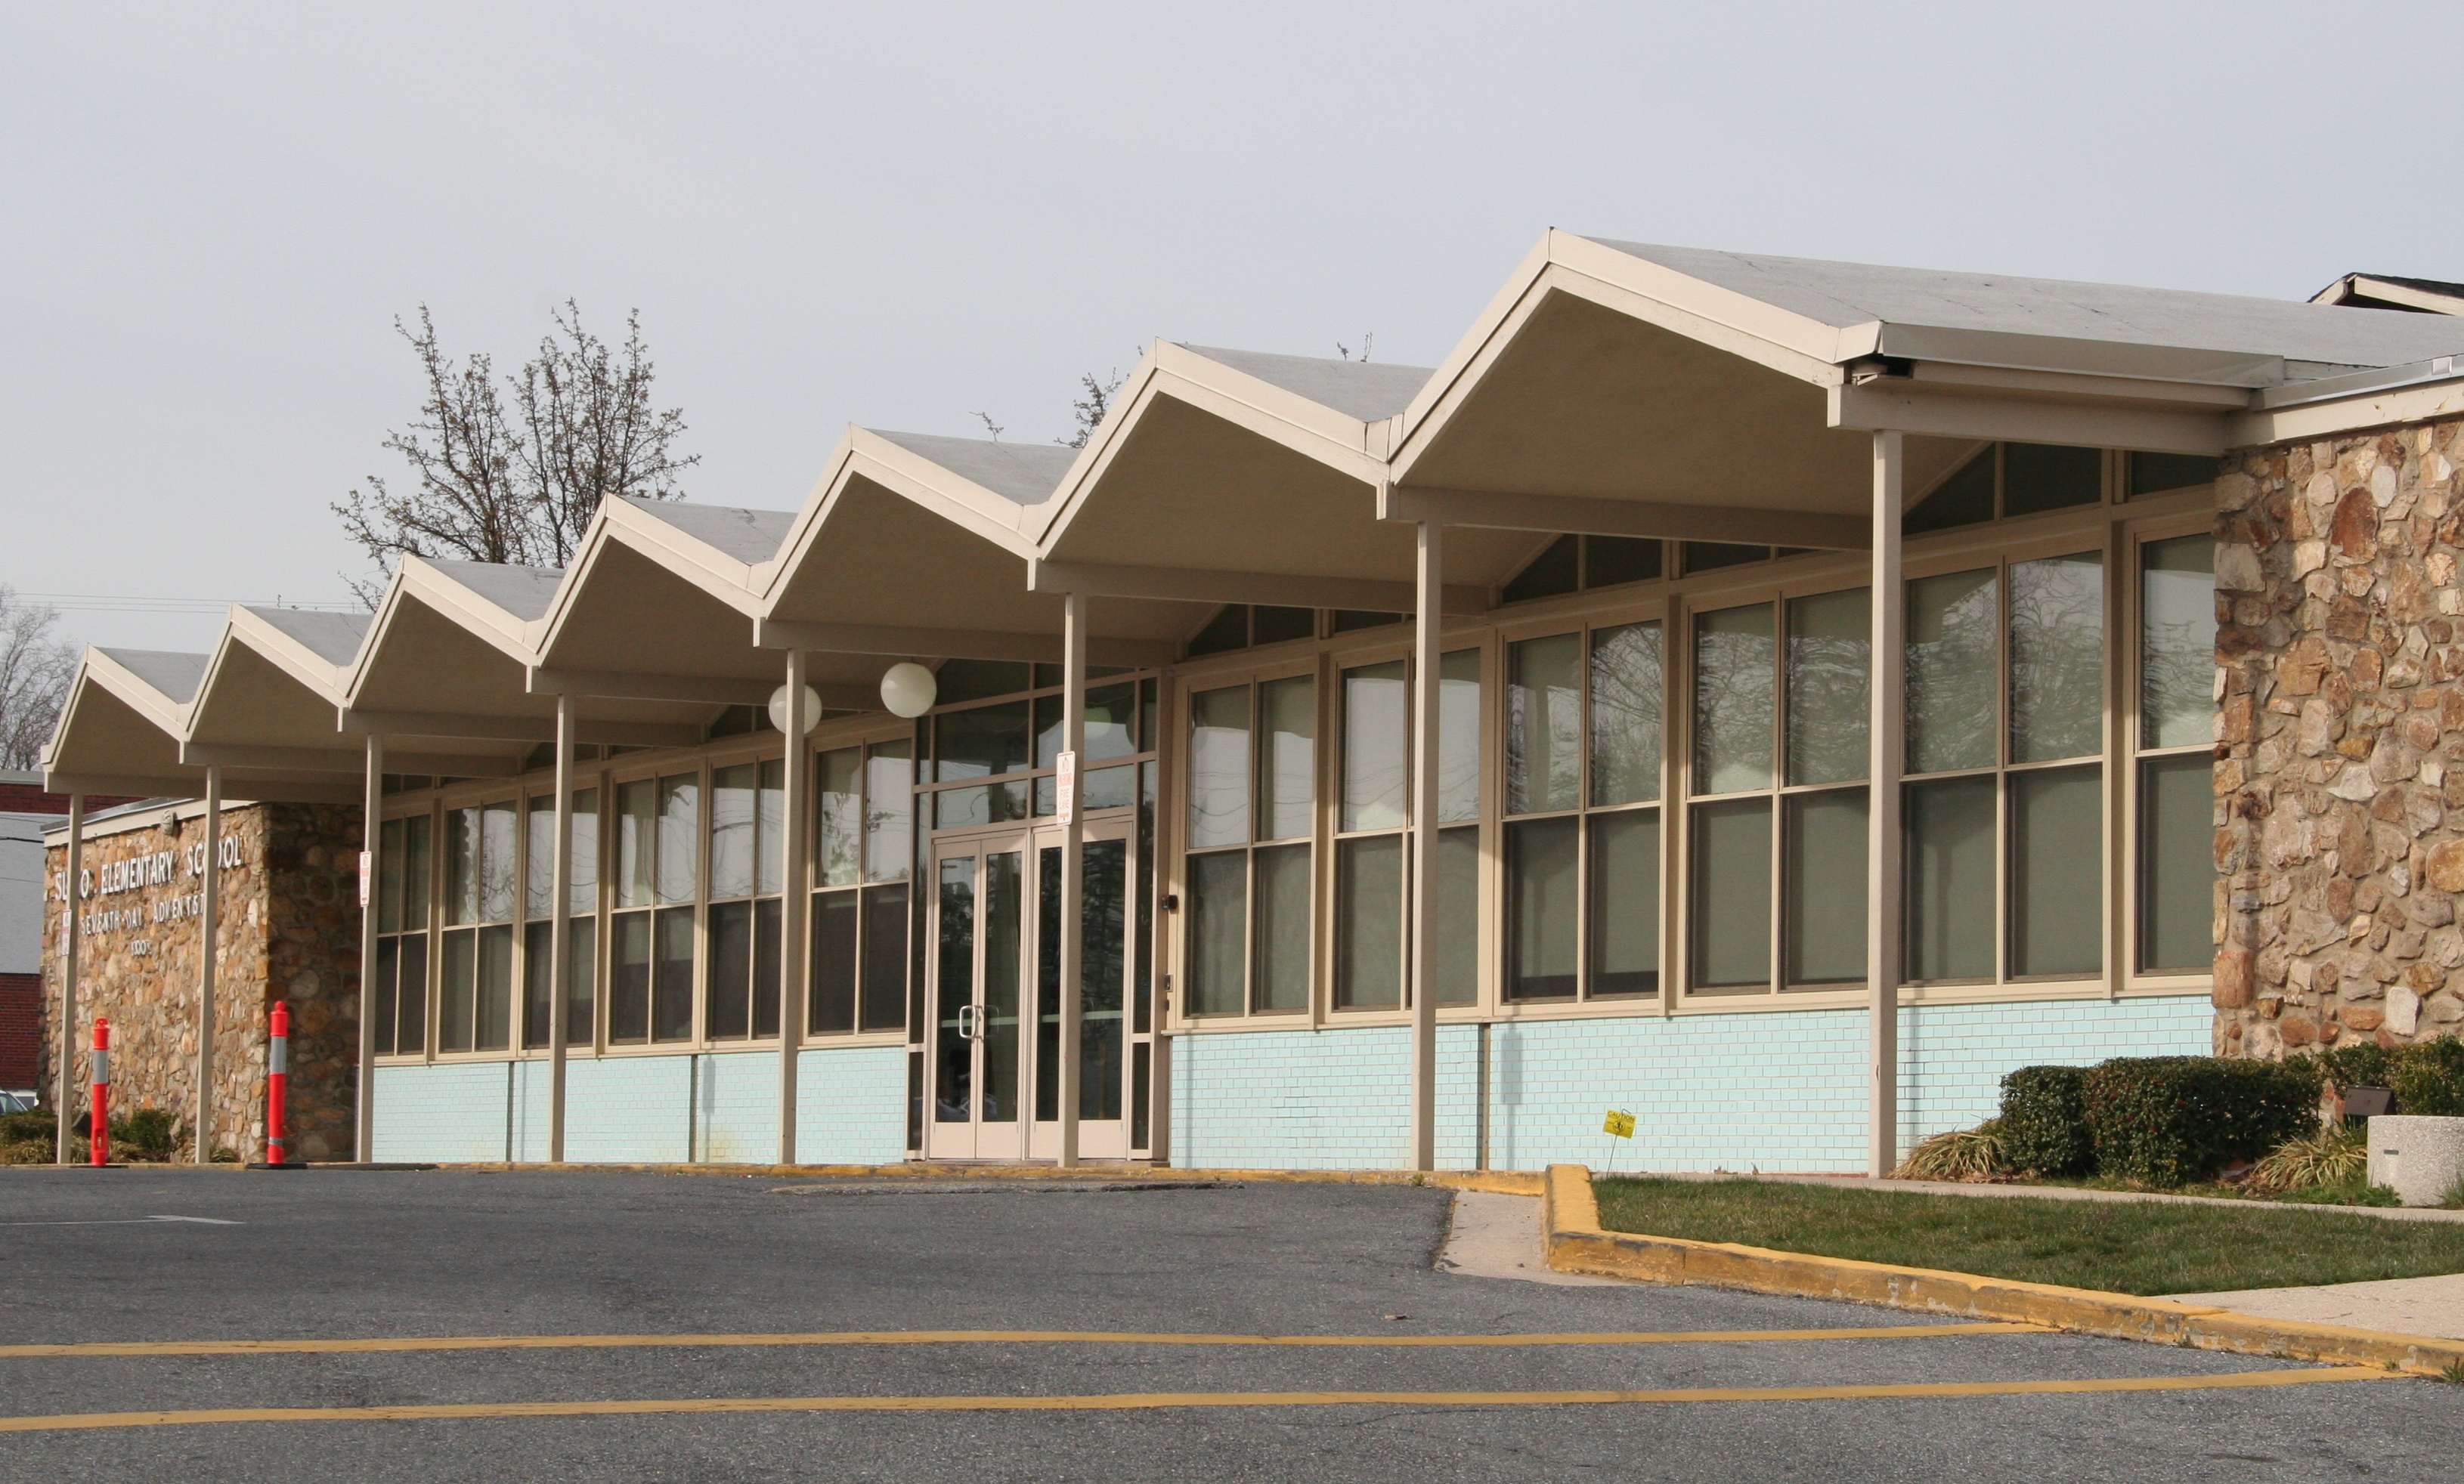 Sligo Adventist Elementary School (1963), Ronald Senseman, architect